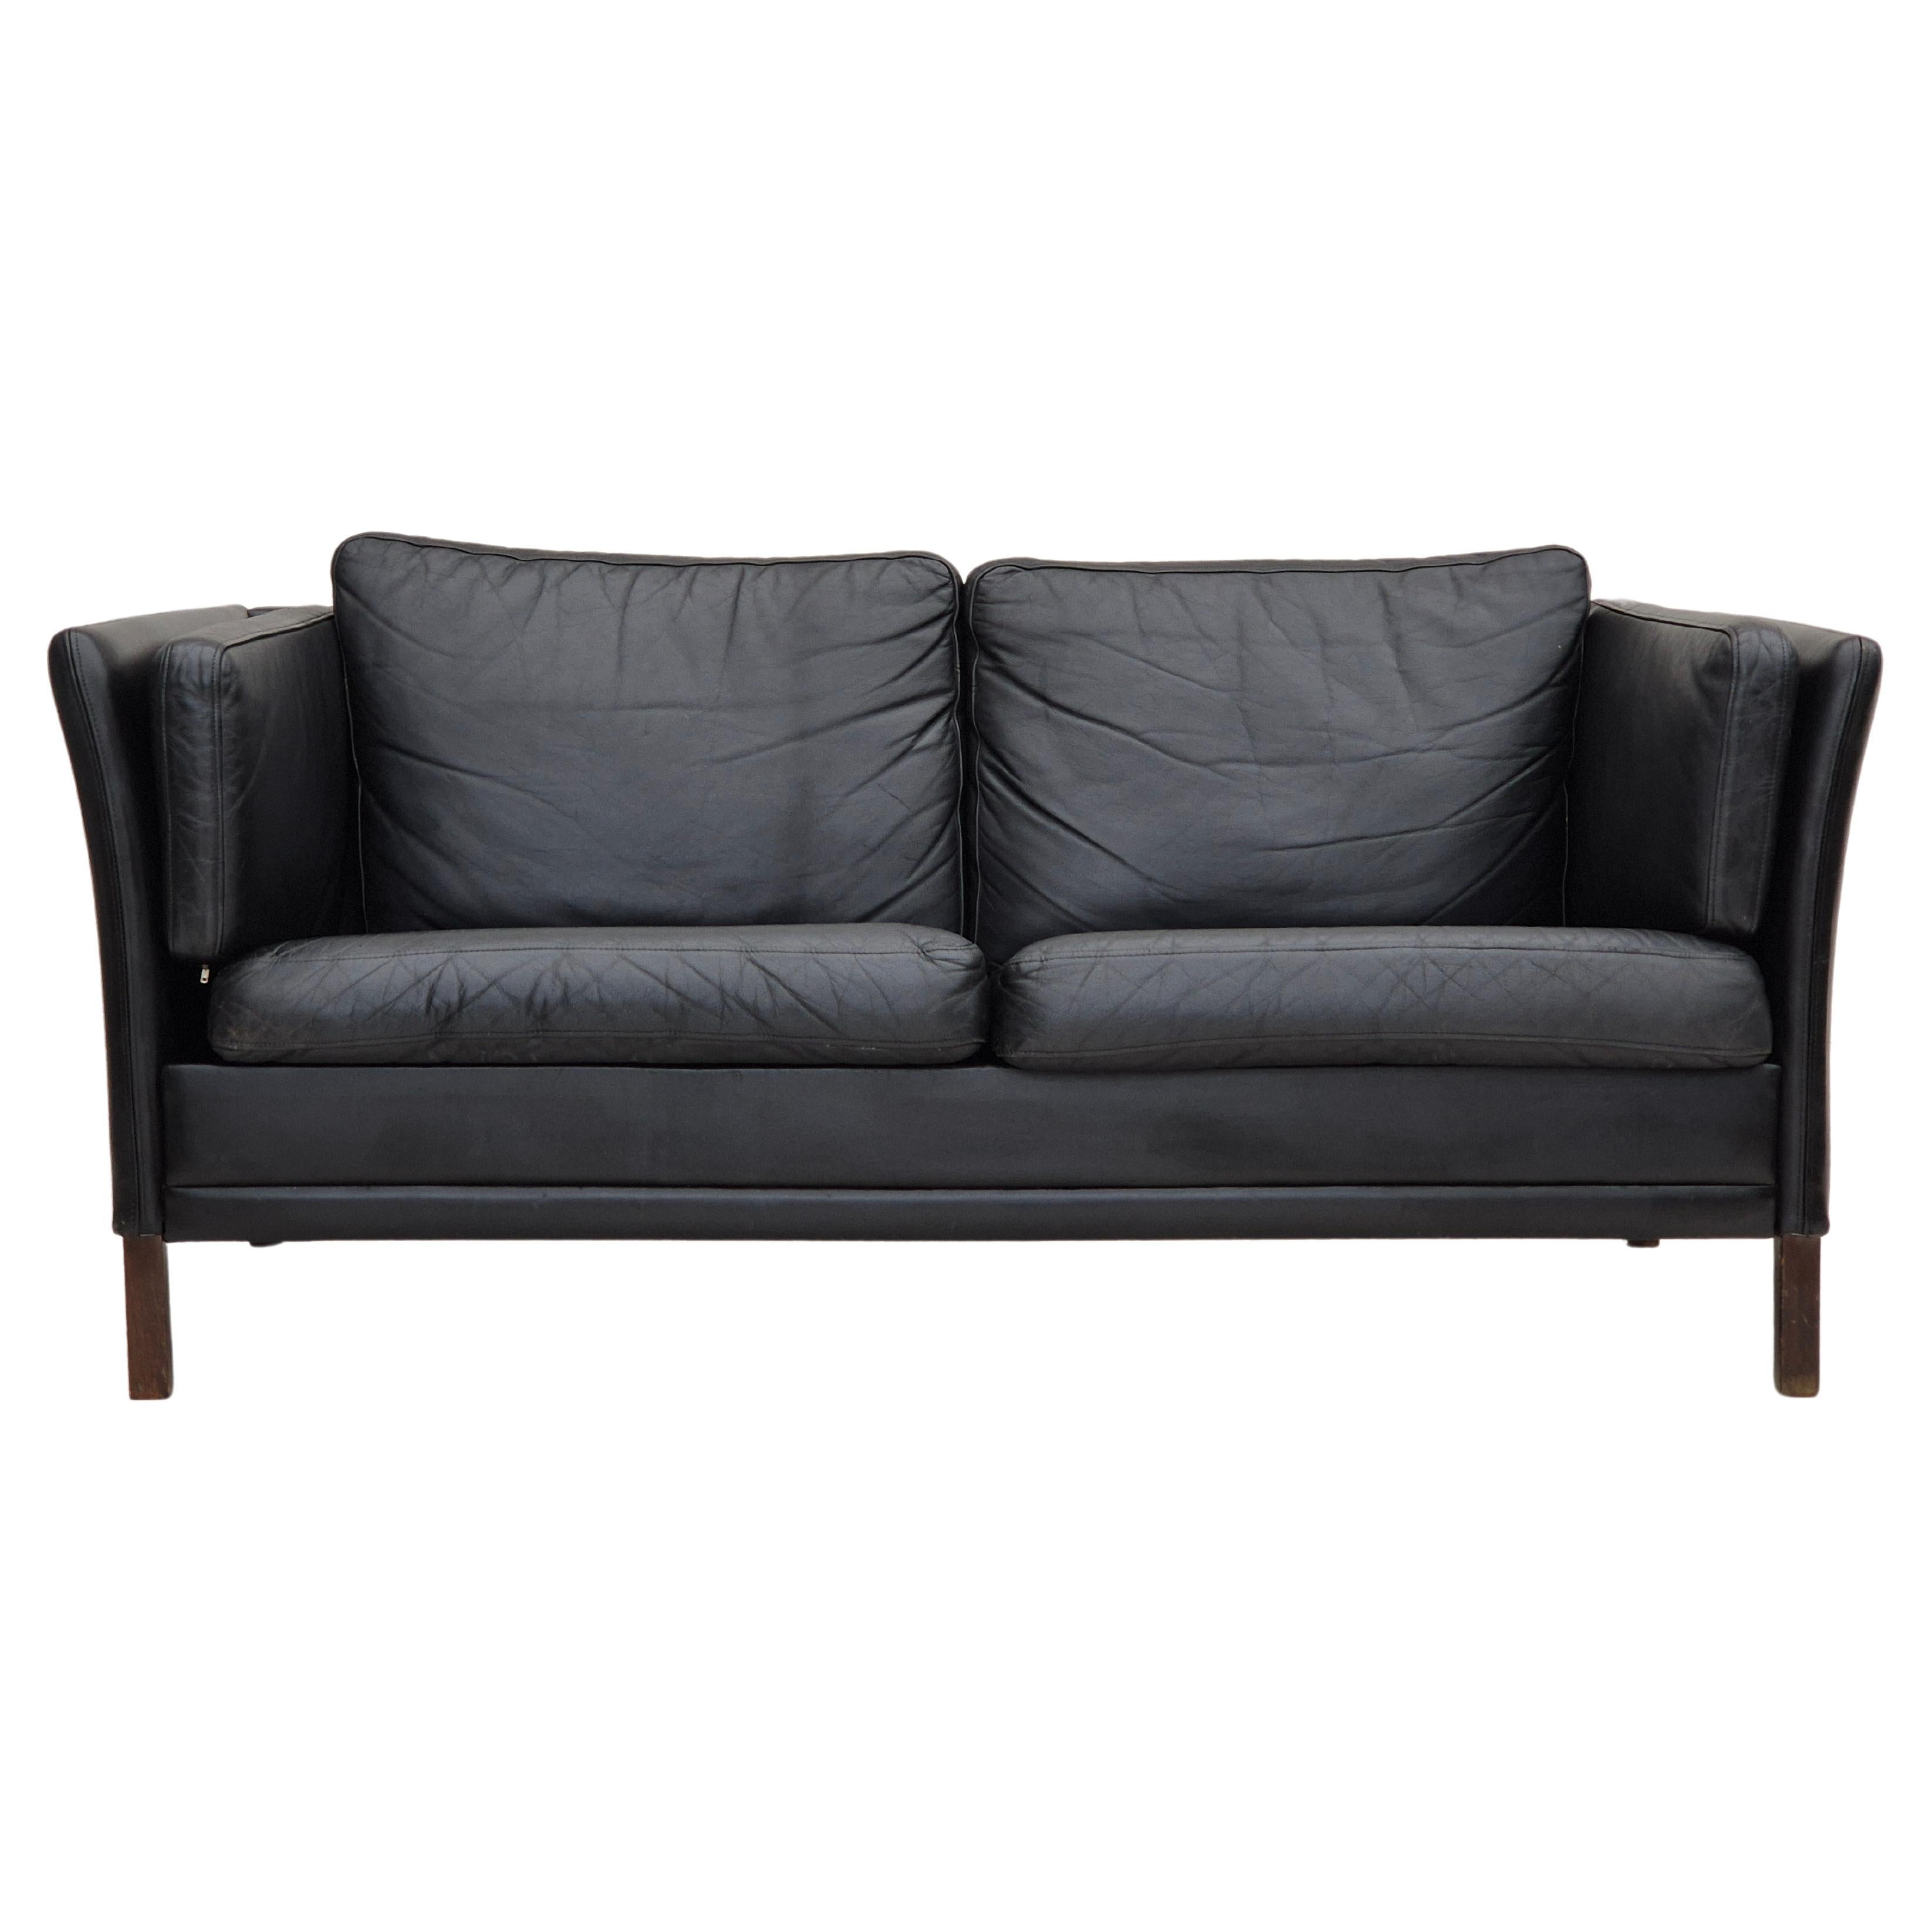 1960s, Danish design by Mogens Hansen, 2 seater sofa in original condition.